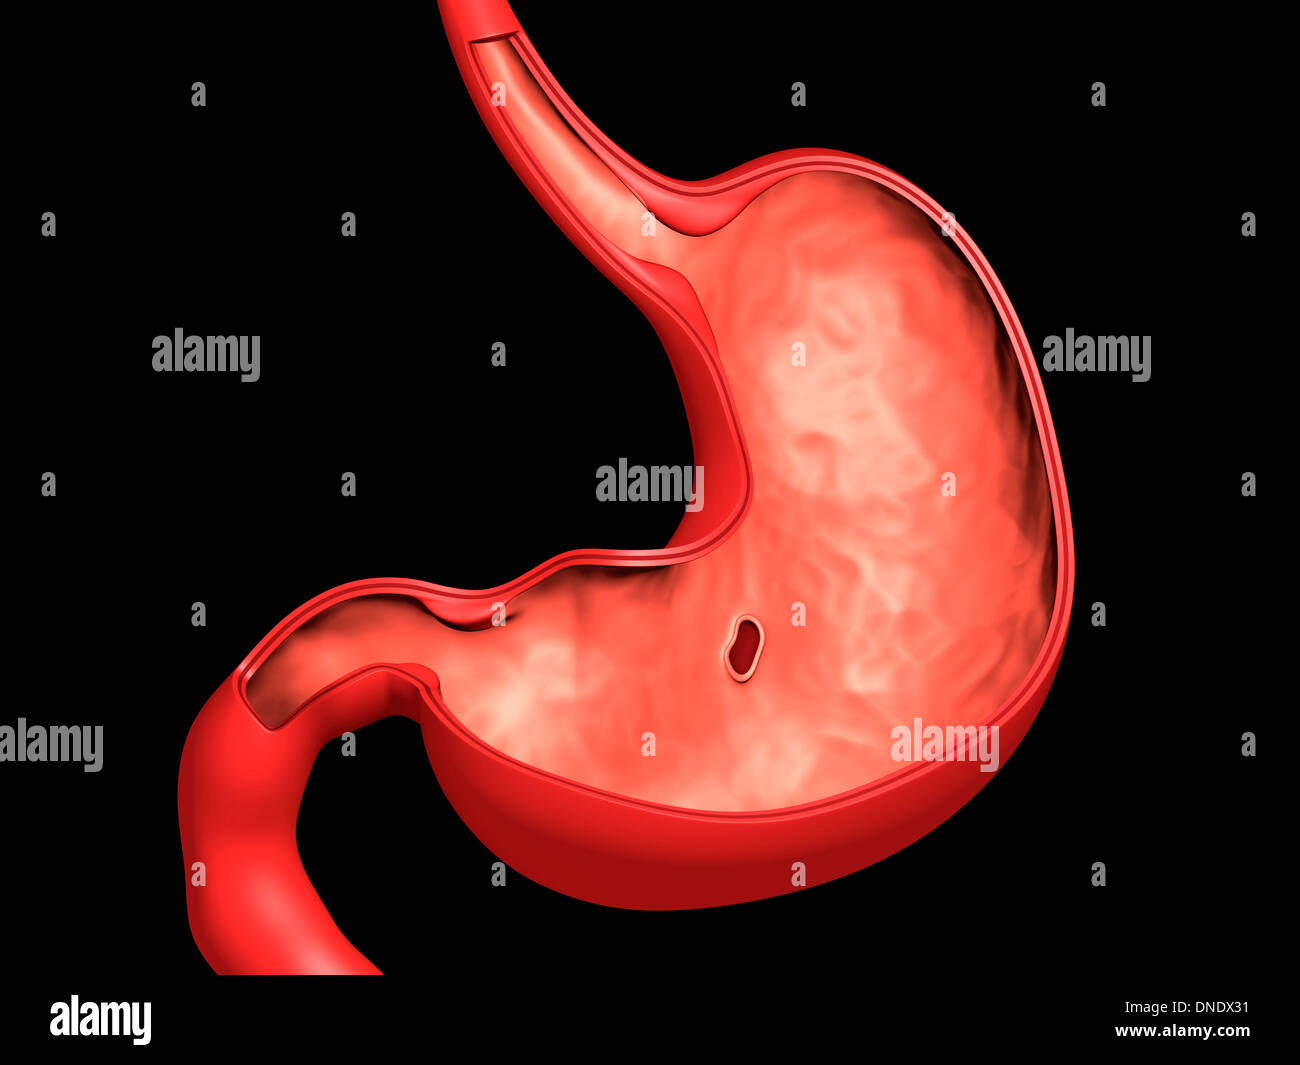 Imagen conceptual de la úlcera péptica en el estómago humano. Foto de stock